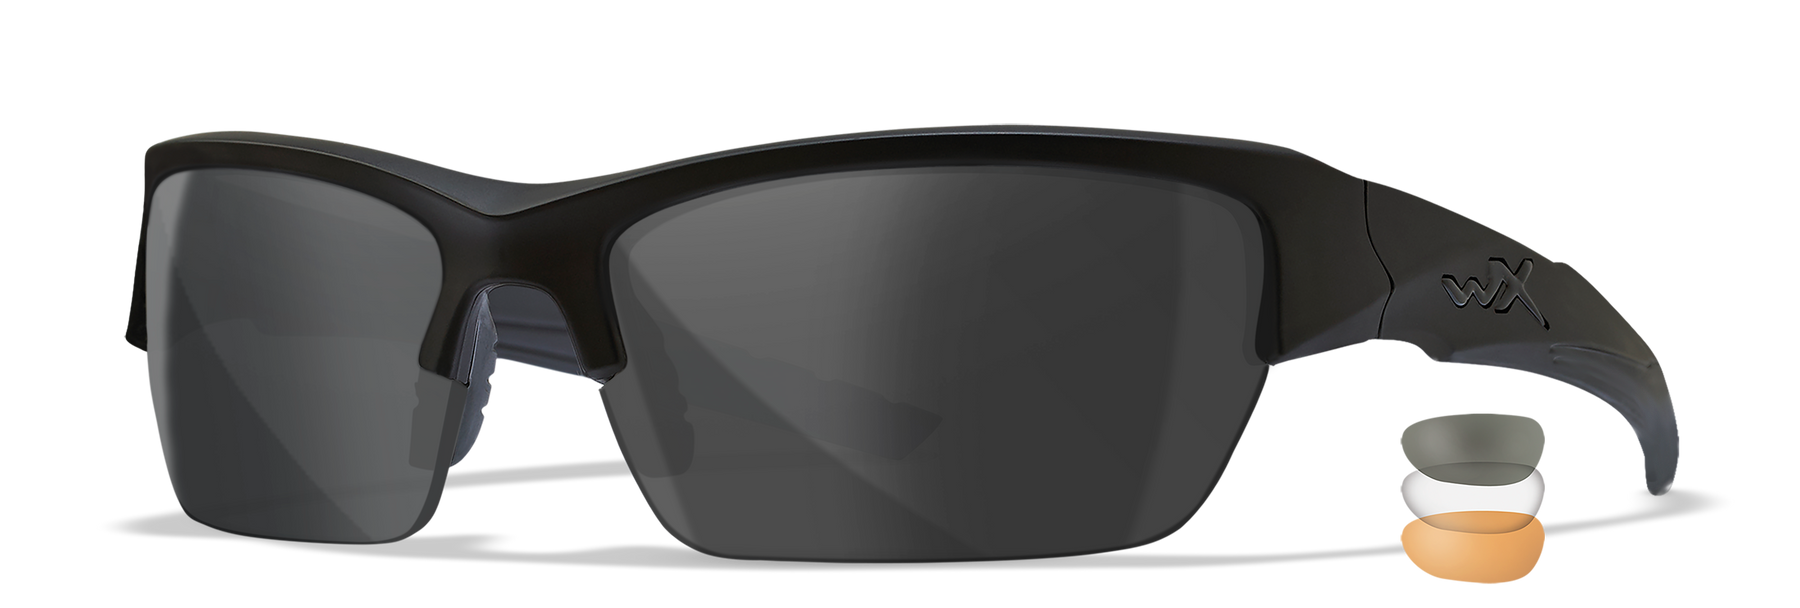 Wiley-X Valor - Ballistic Eyewear Tactical Sunglasses